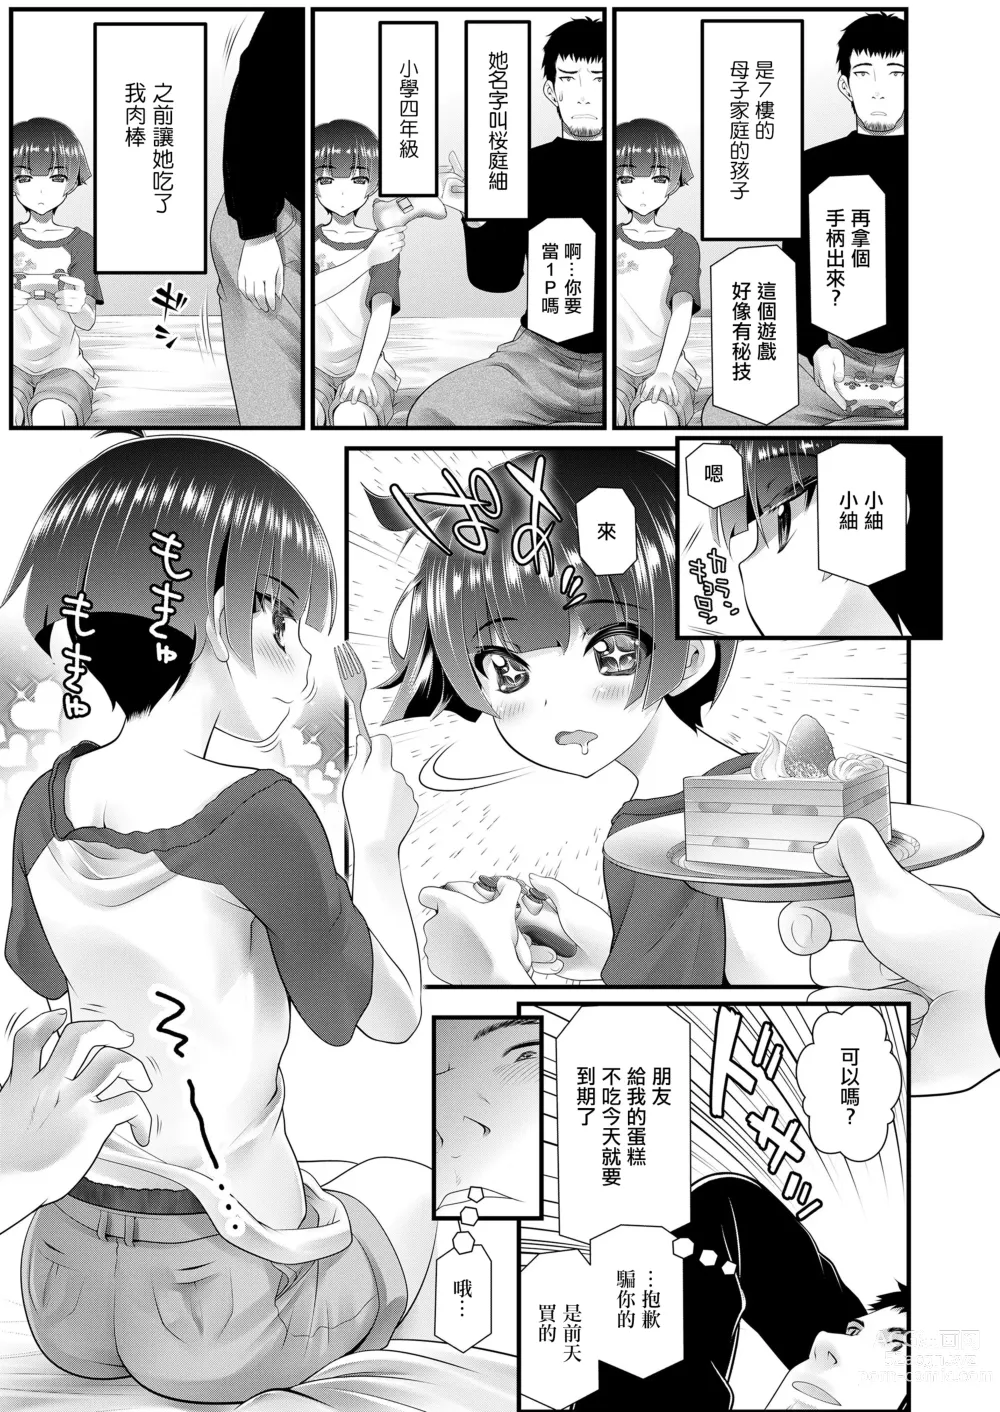 Page 3 of manga Omochikaeri